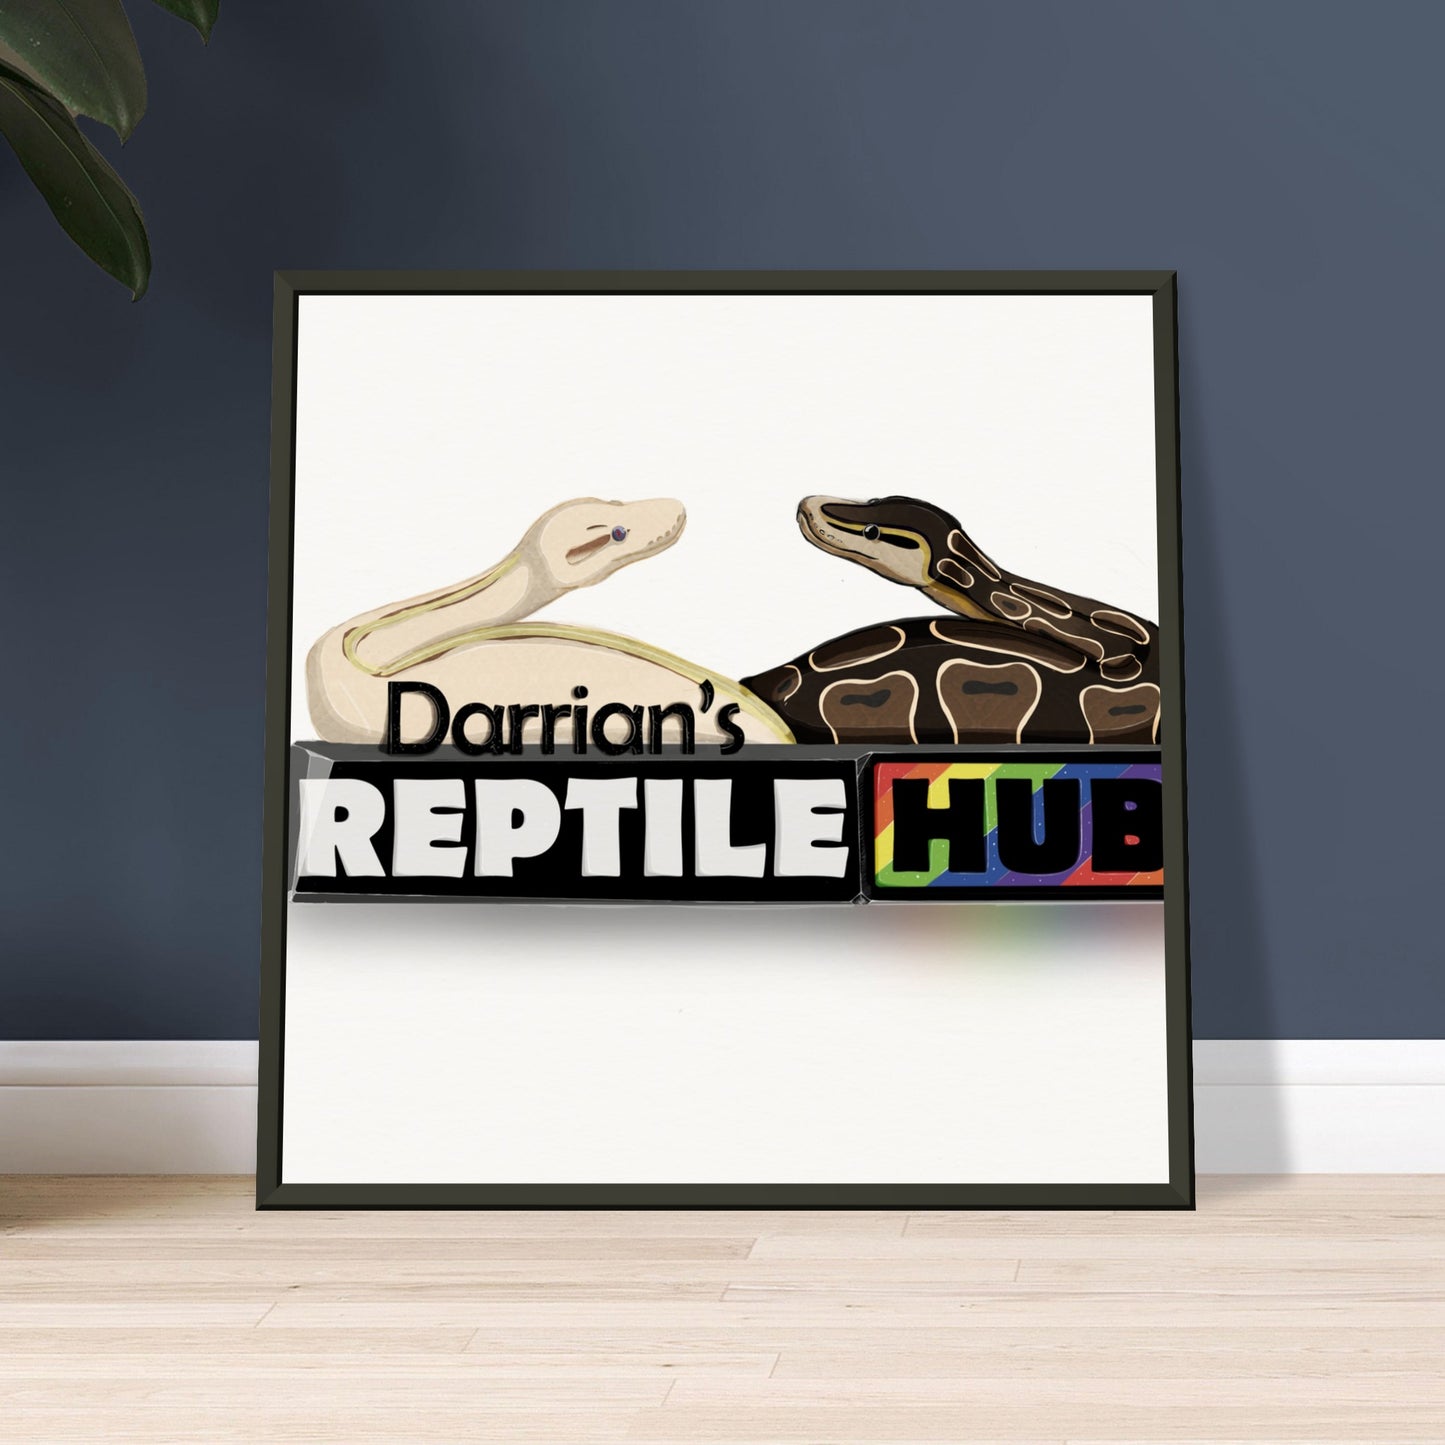 Darrian's Reptile Hub - Museum-Quality Matte Paper Metal Framed Poster